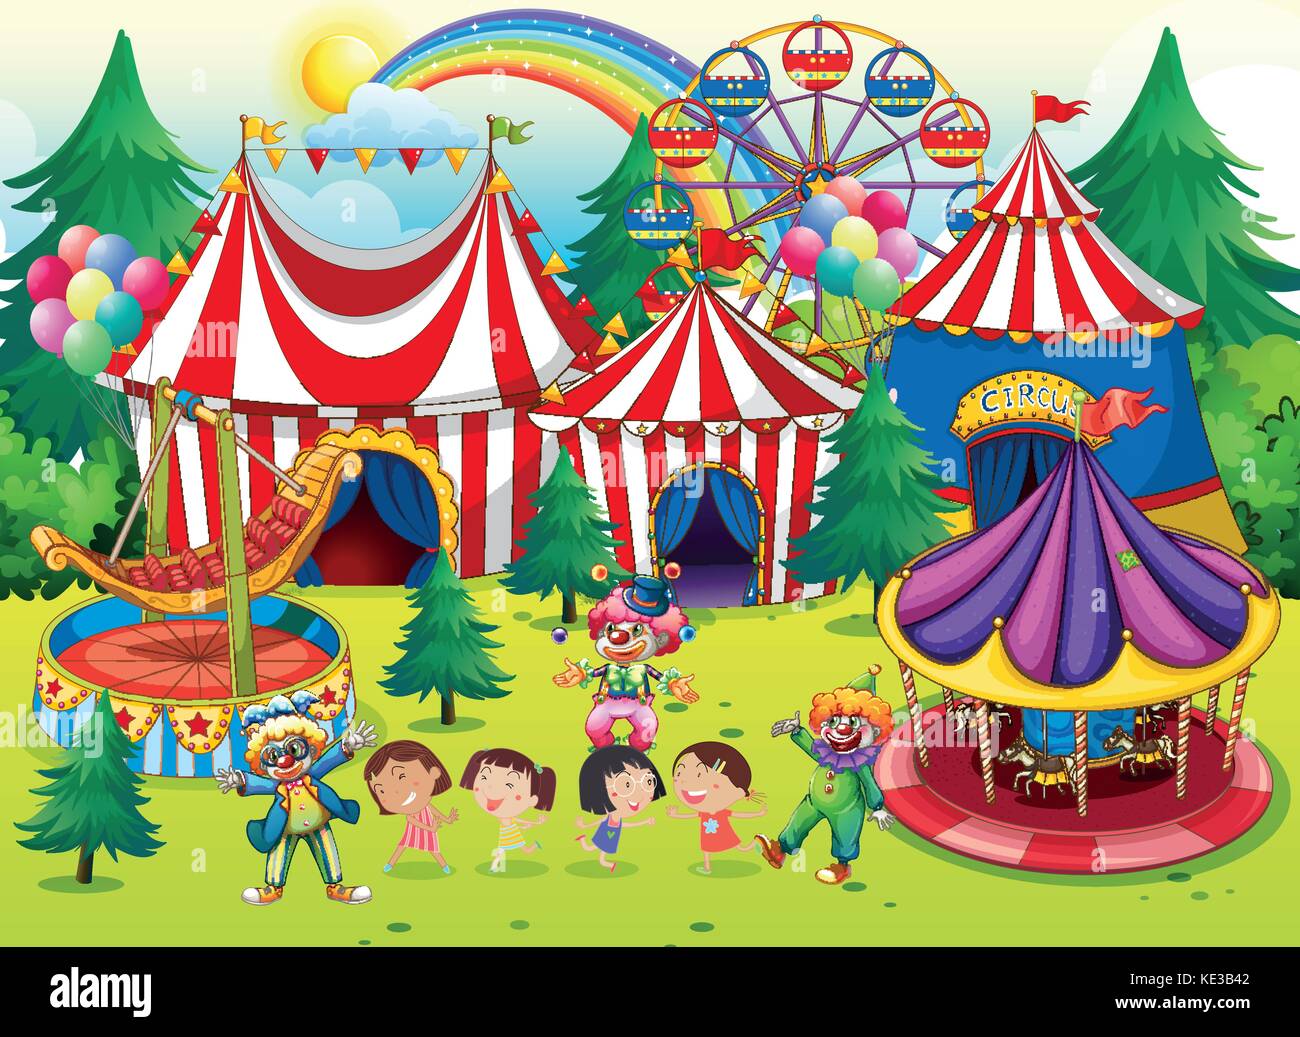 Children having fun at the circus illustration Stock Vector